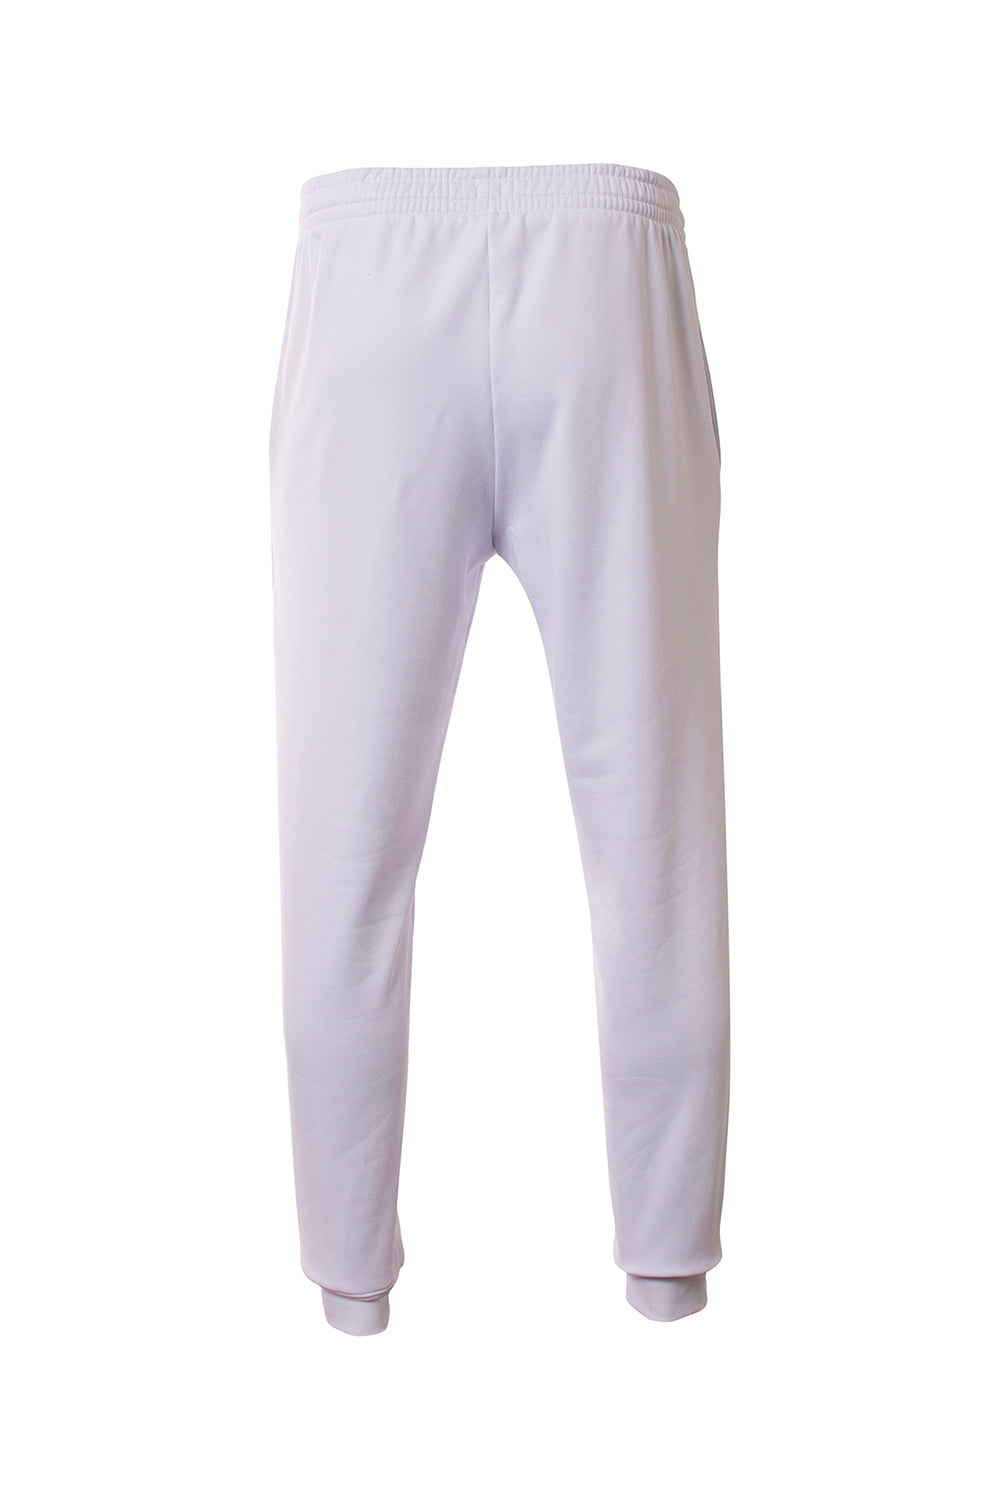 A4 N6213 Mens Sprint Tech Fleece Jogger Sweatpants w/ Pockets White Flat Back